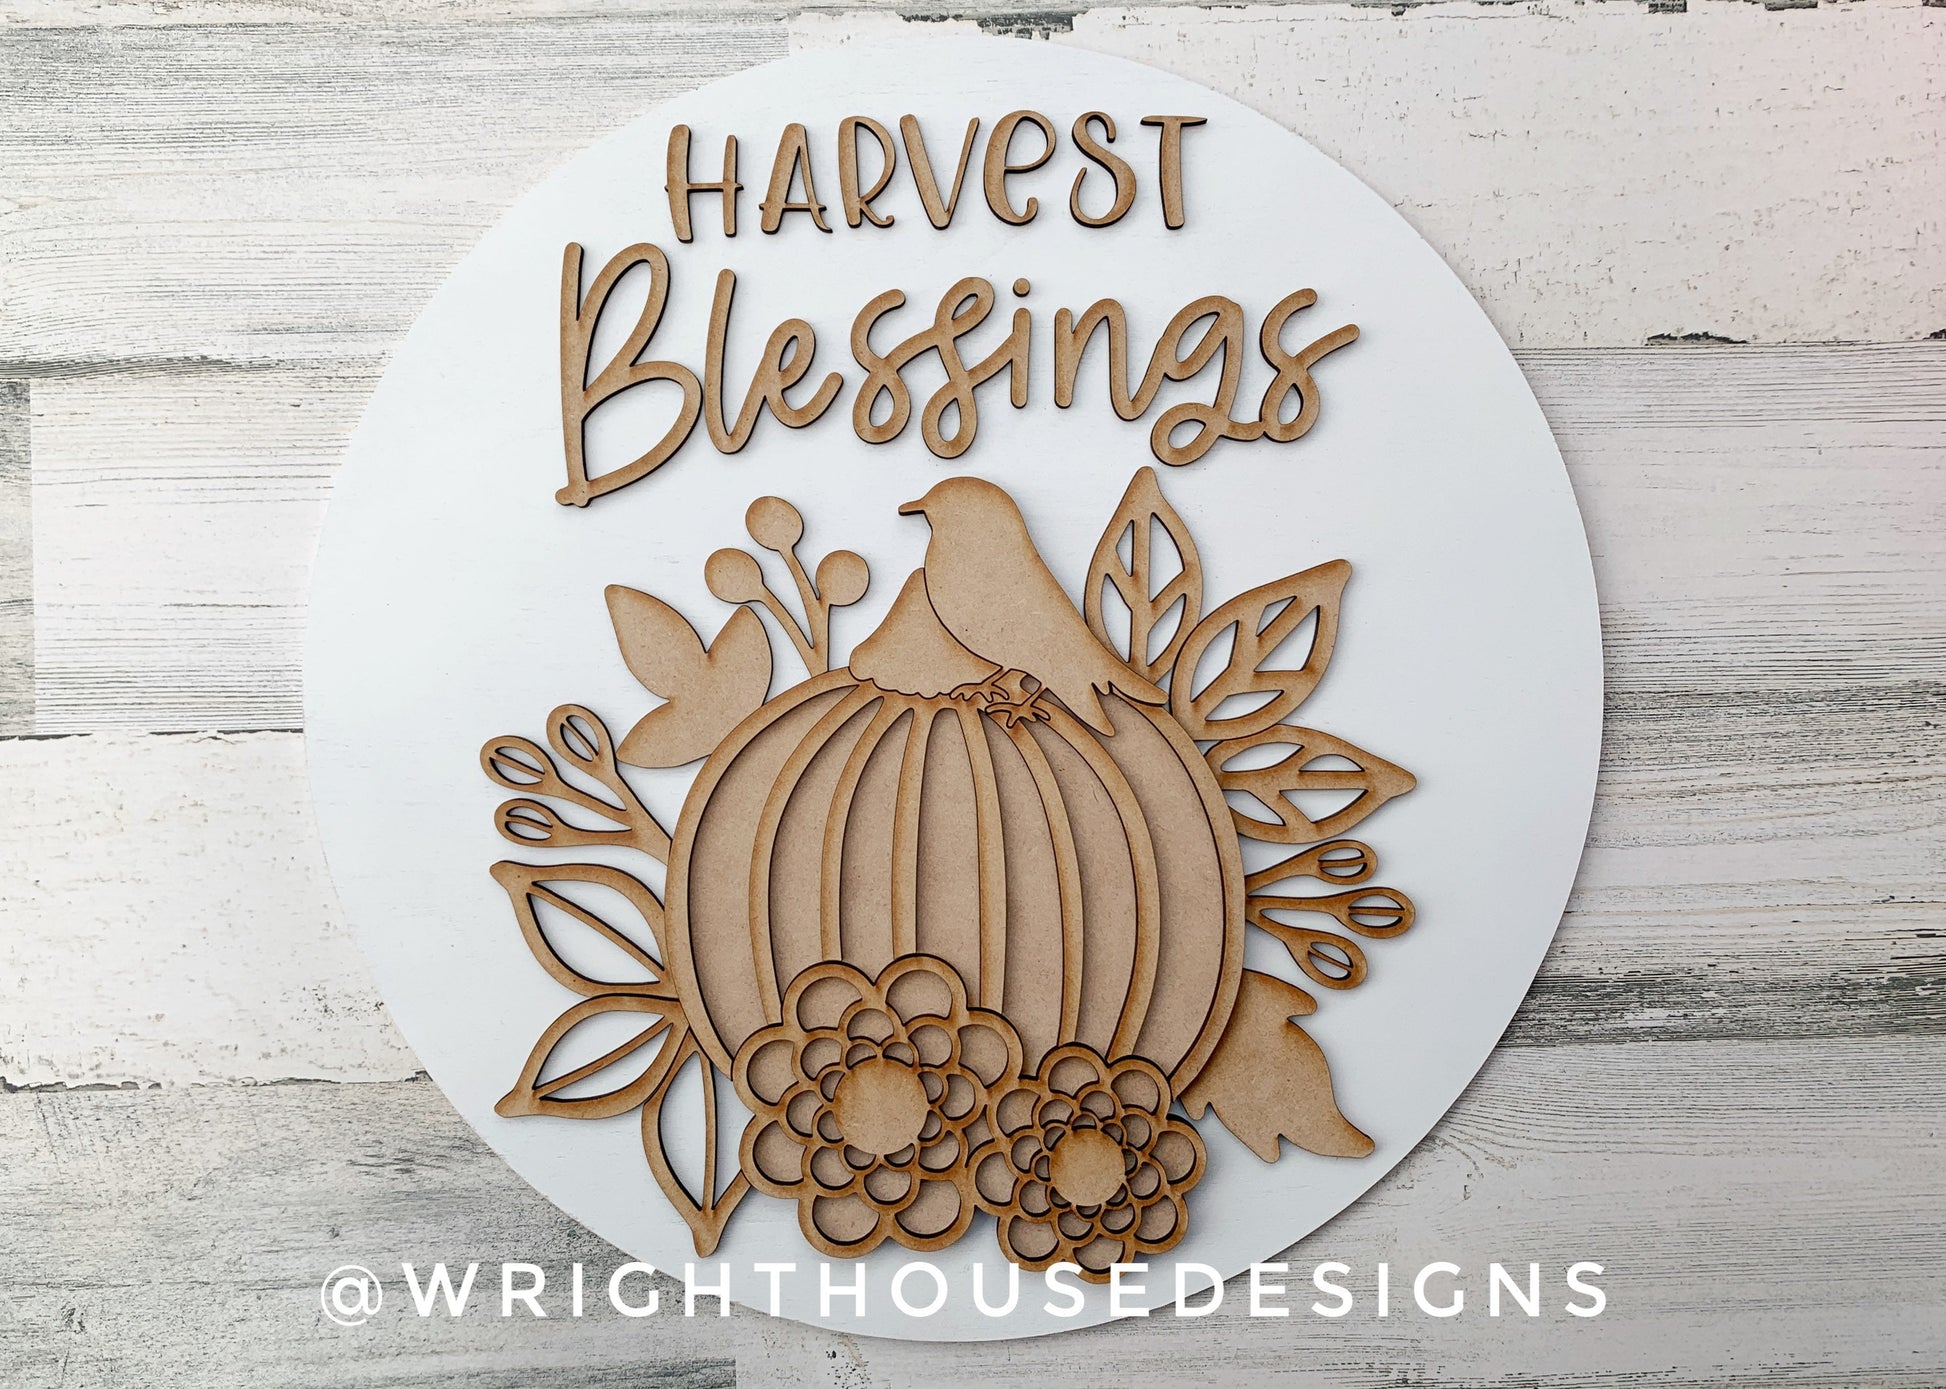 Harvest Blessings Pumpkin and Floral Door Hanger Round - Seasonal Sign Making and DIY Kits - Cut File For Glowforge Laser - Digital SVG File